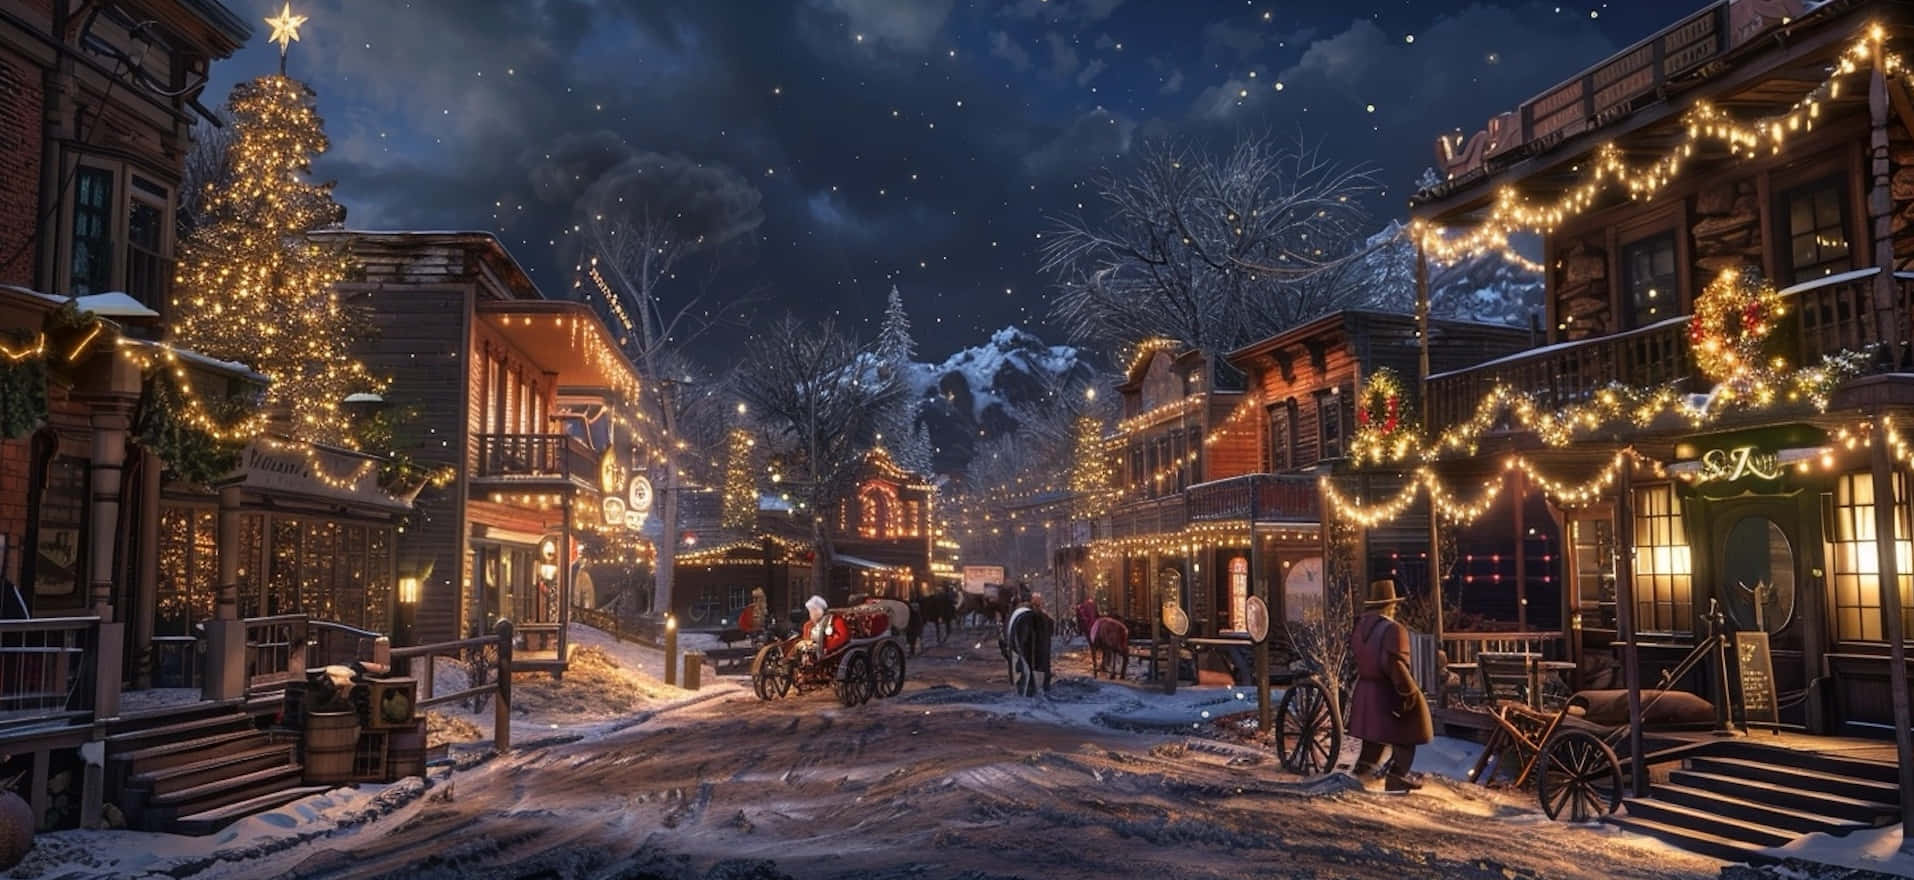 Enchanted Christmas Eve Town Wallpaper